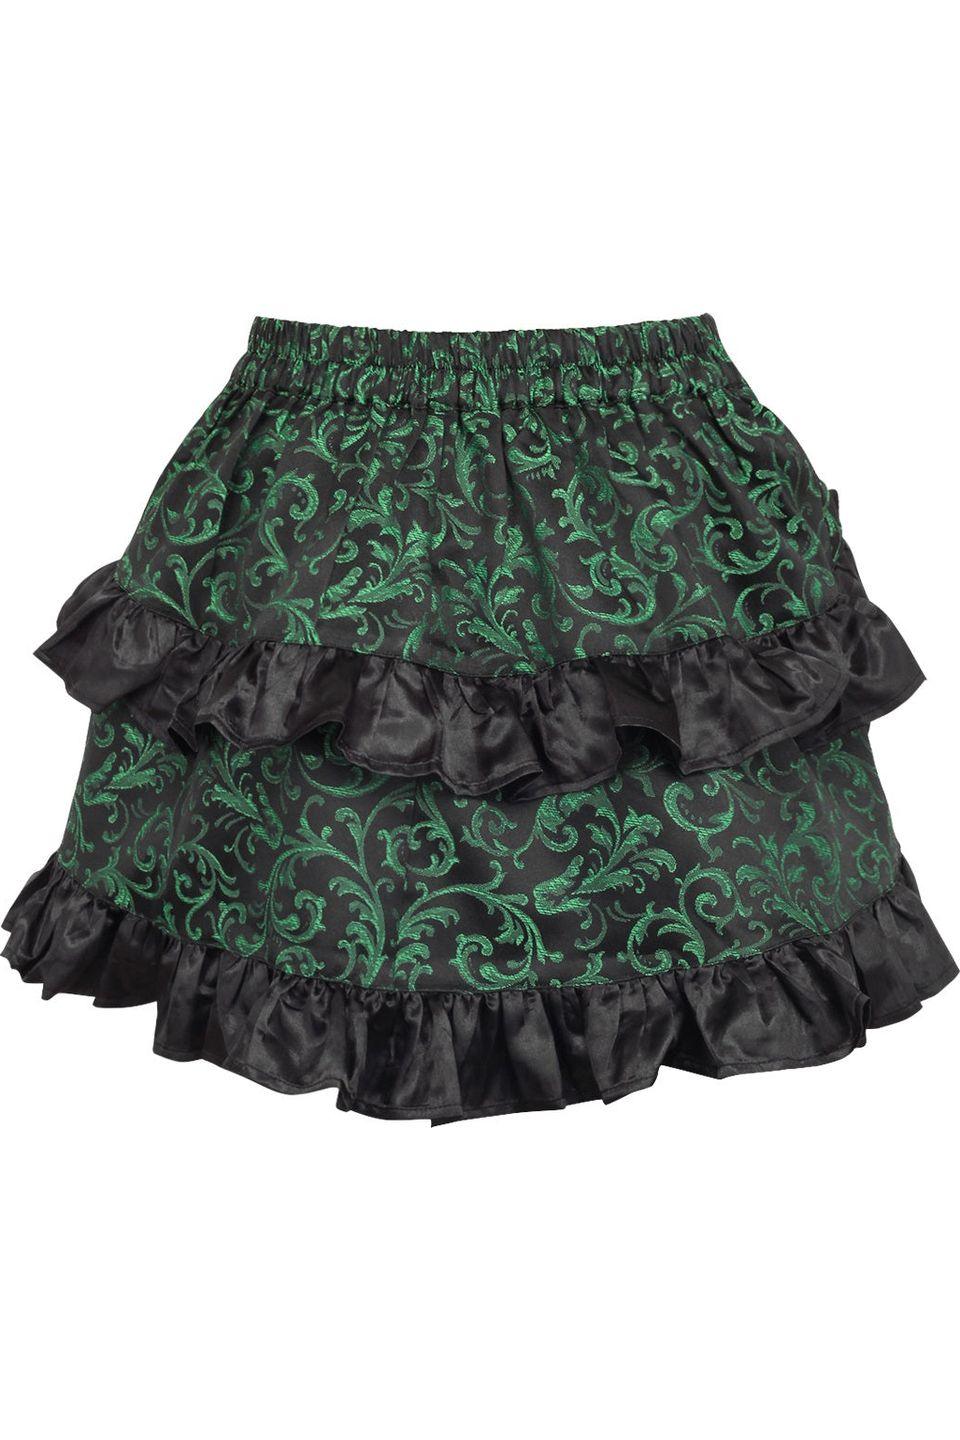 Green/Black Brocade Ruched Bustle Skirt - AMIClubwear